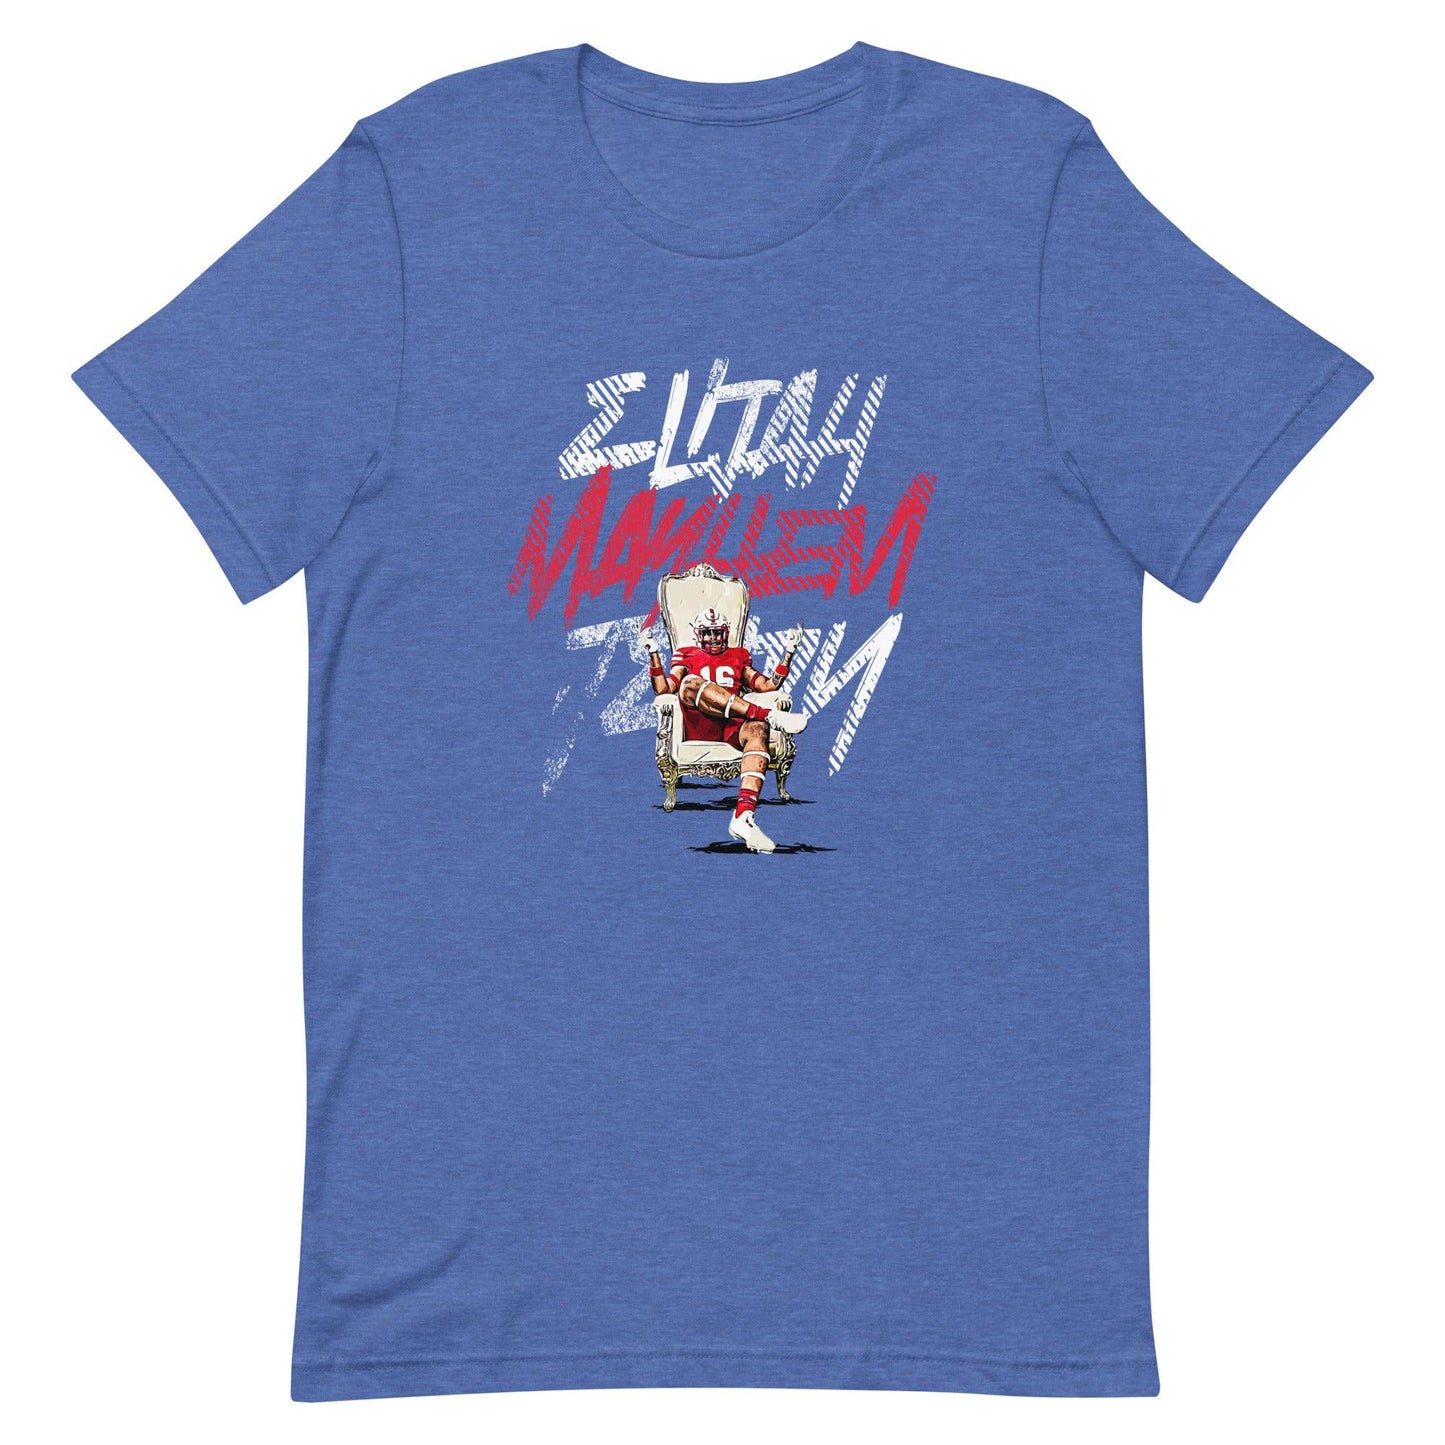 Elijah Jeudy "Gameday" t-shirt - Fan Arch